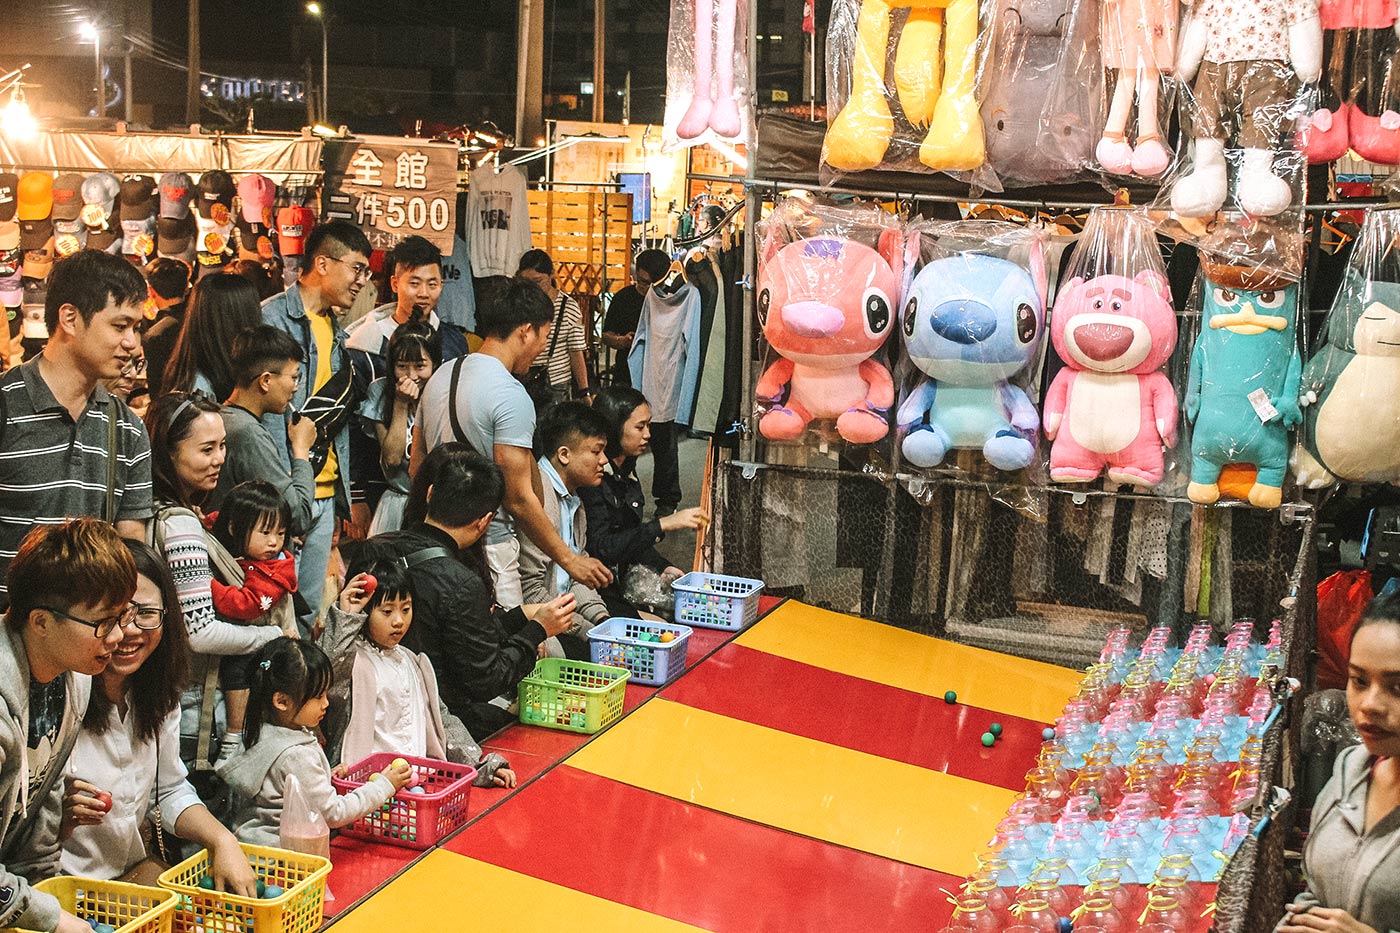 Top things to do in Tainan, Taiwan blog post | Tainan Flower Market (Night Market)